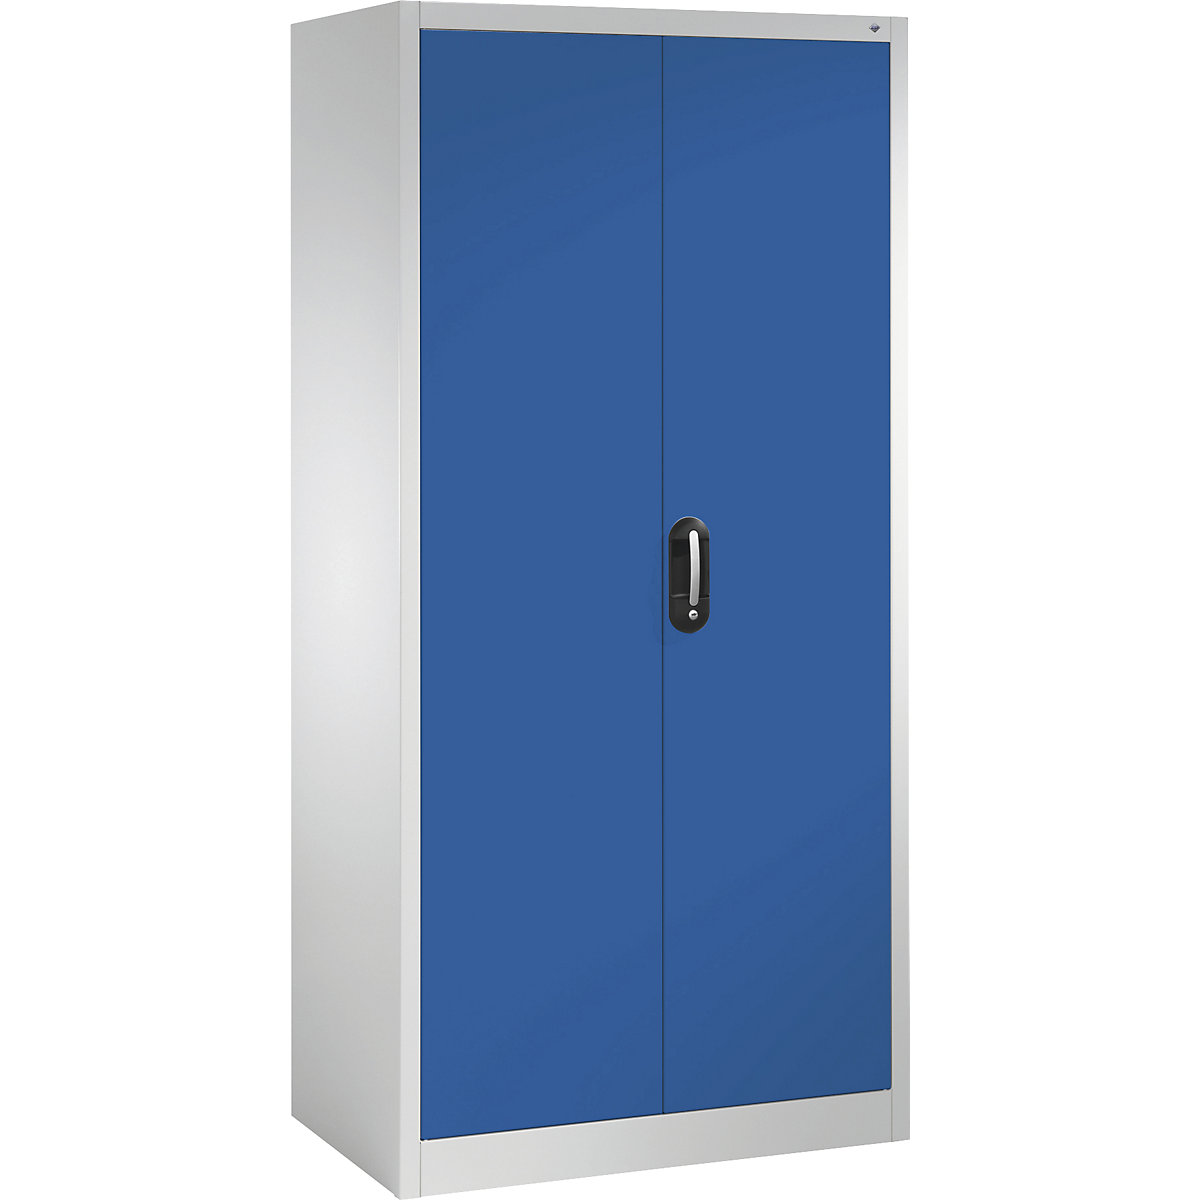 ACURADO universal cupboard – C+P, WxD 930 x 600 mm, light grey / gentian blue-14